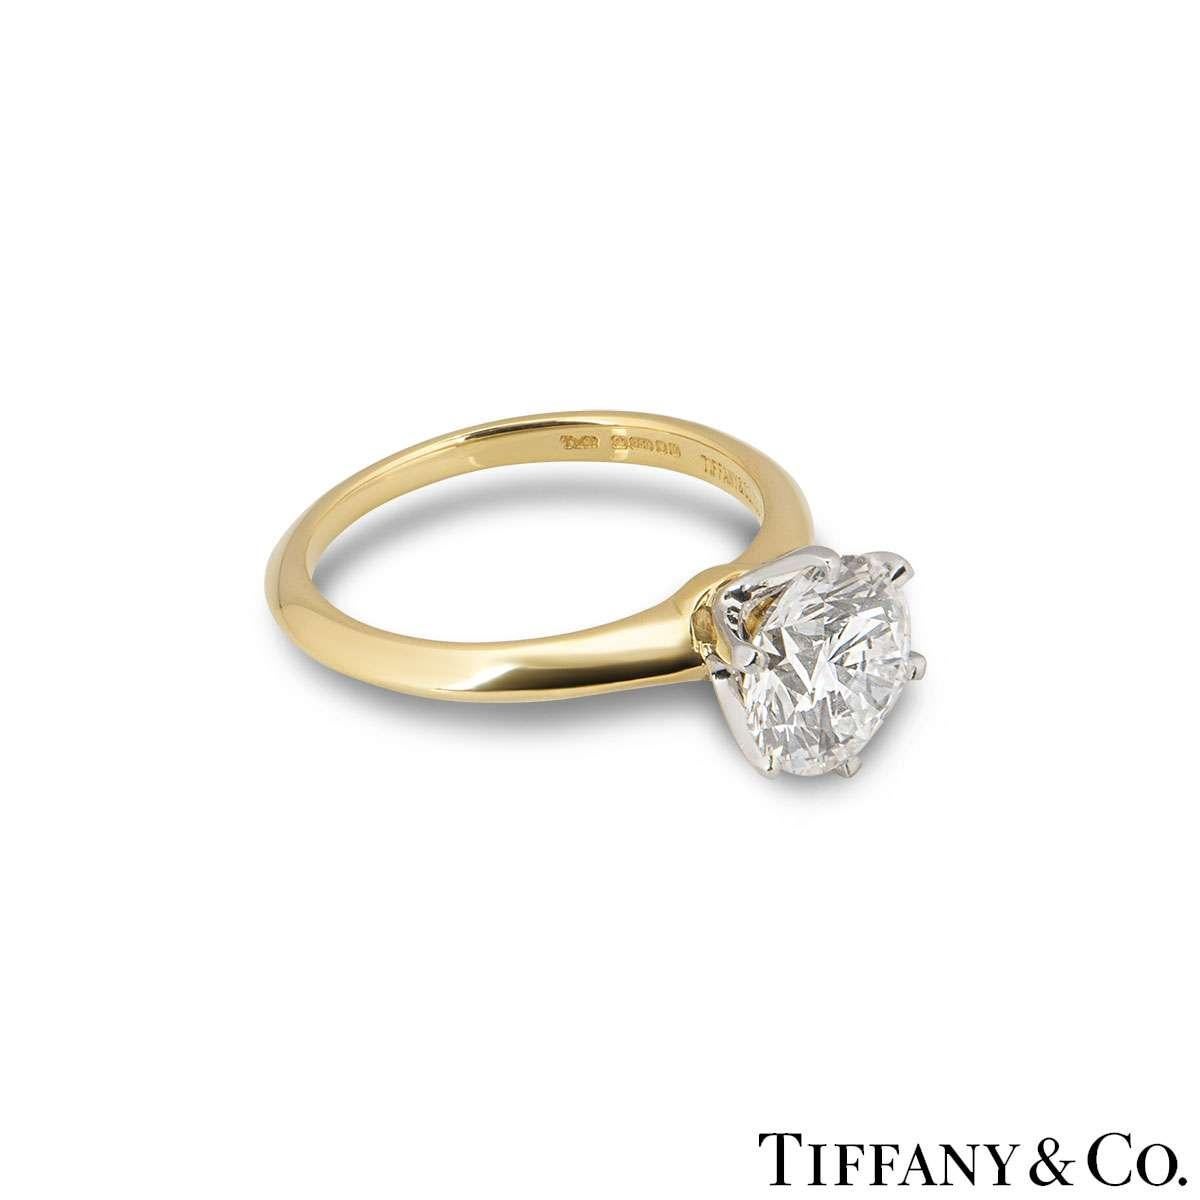 Tiffany & Co. Yellow Gold Round Diamond Engagement Ring 2.05 Carat D/VVS2 1